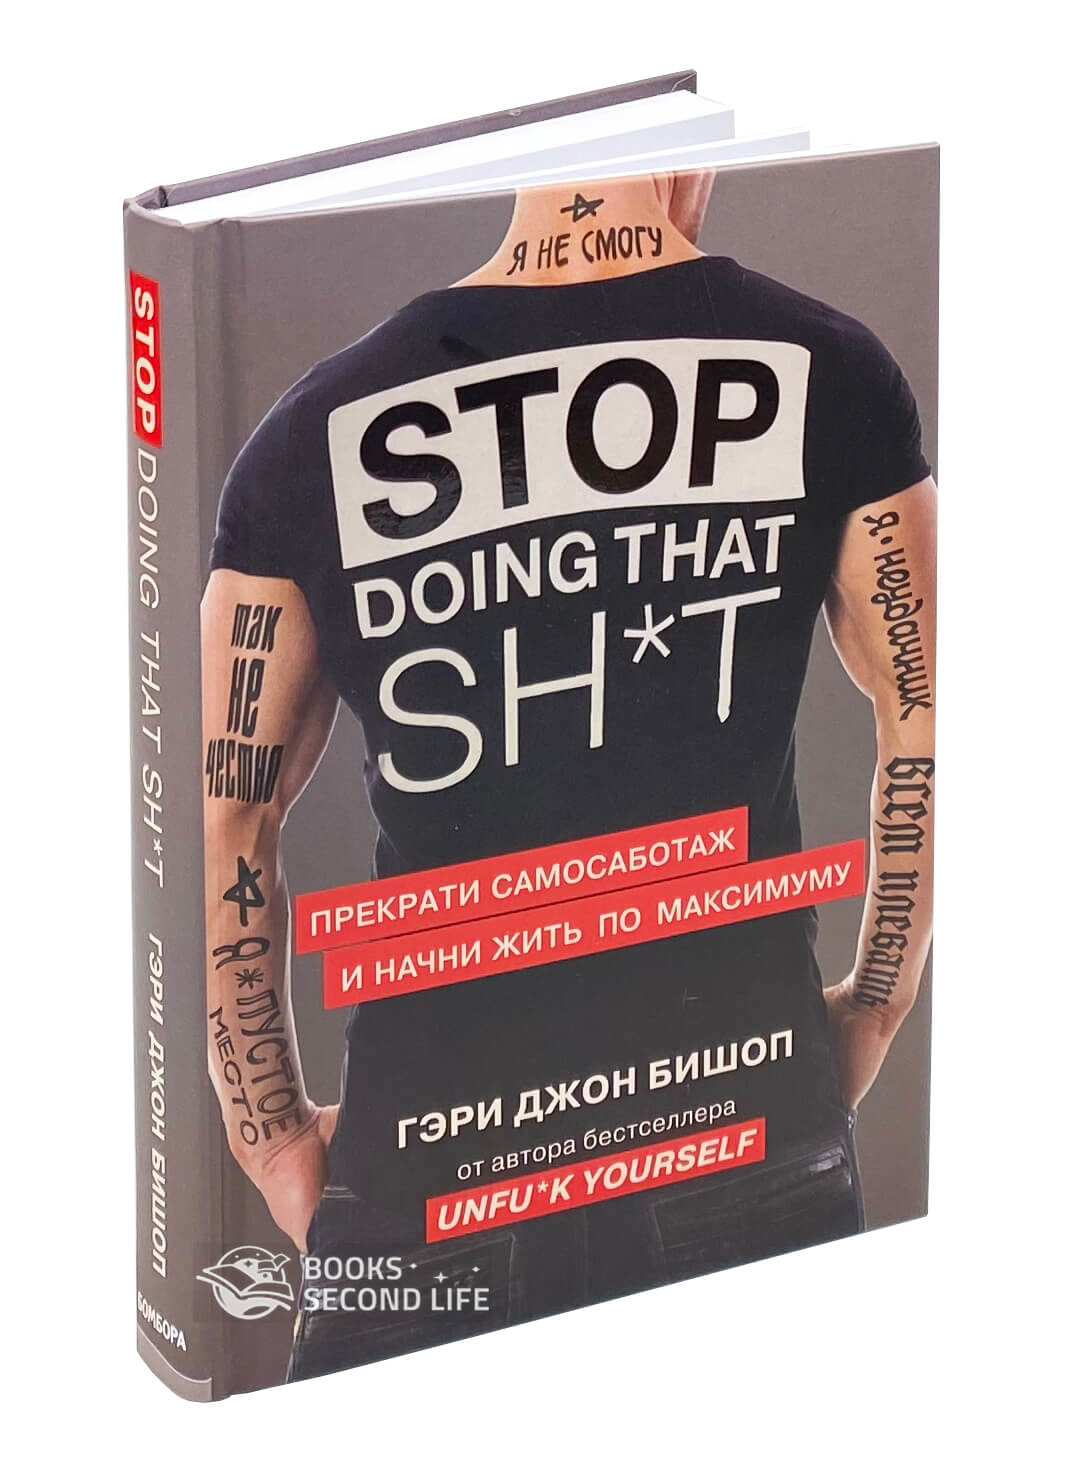 Stop doing that sh*t. Прекрати самосаботаж и начни жить по максимуму. Автор — Гэри Джон Бишоп. 